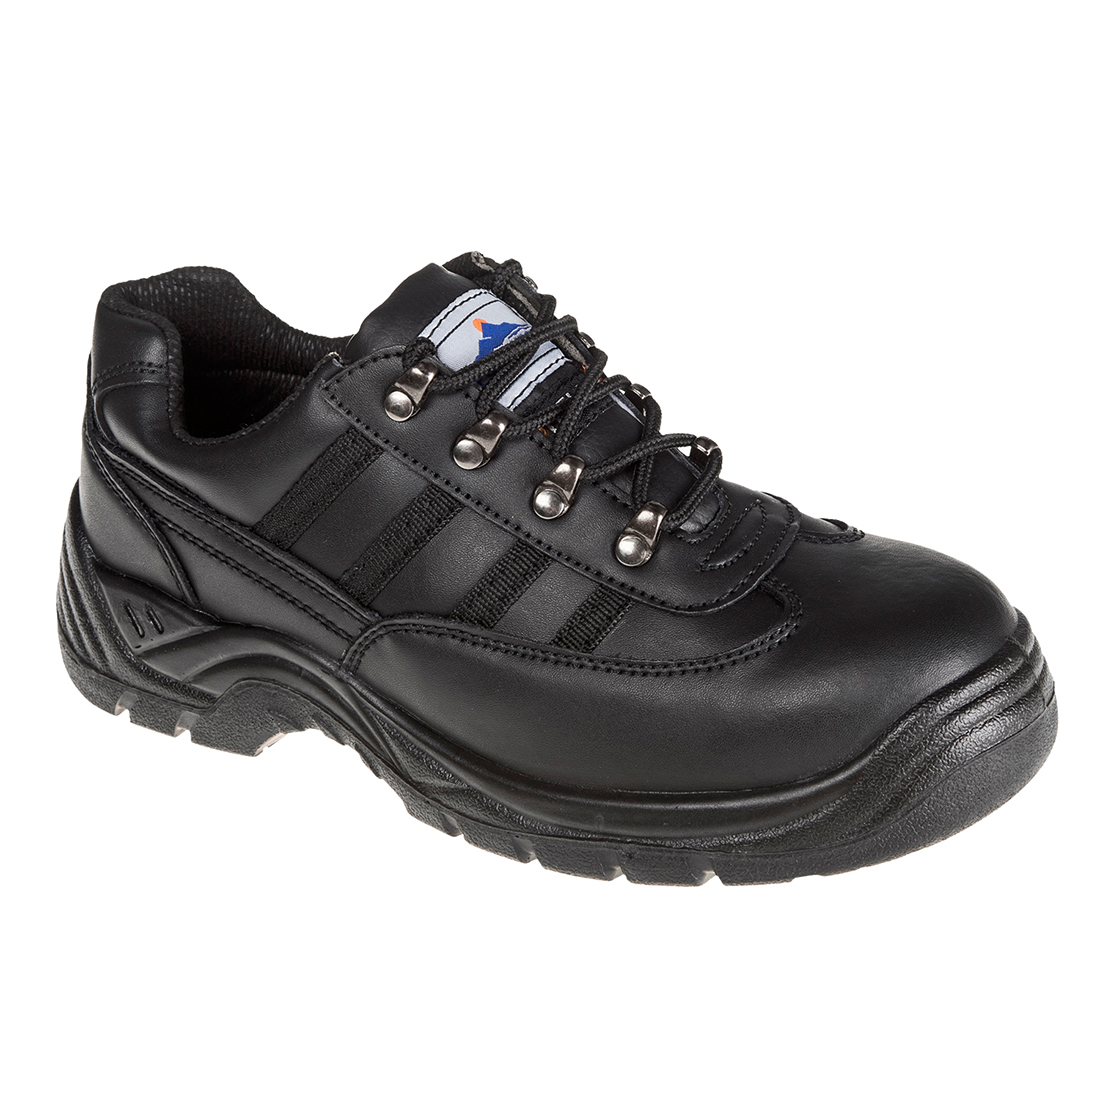 Steelite Safety Trainer S1 Shoes FW15